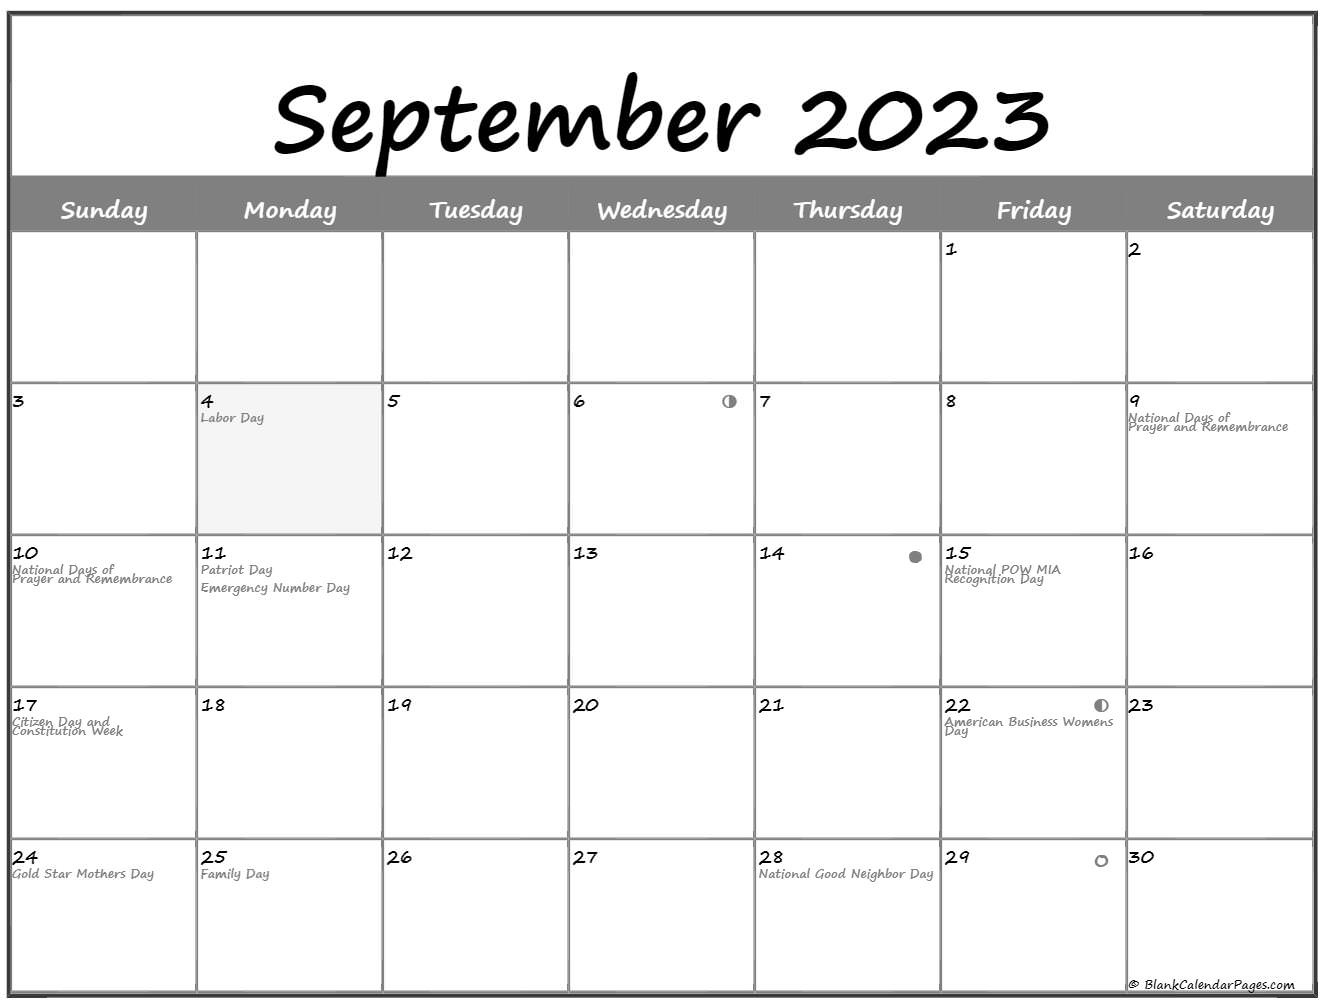 September 2023 Lunar Calendar | Moon Phase Calendar